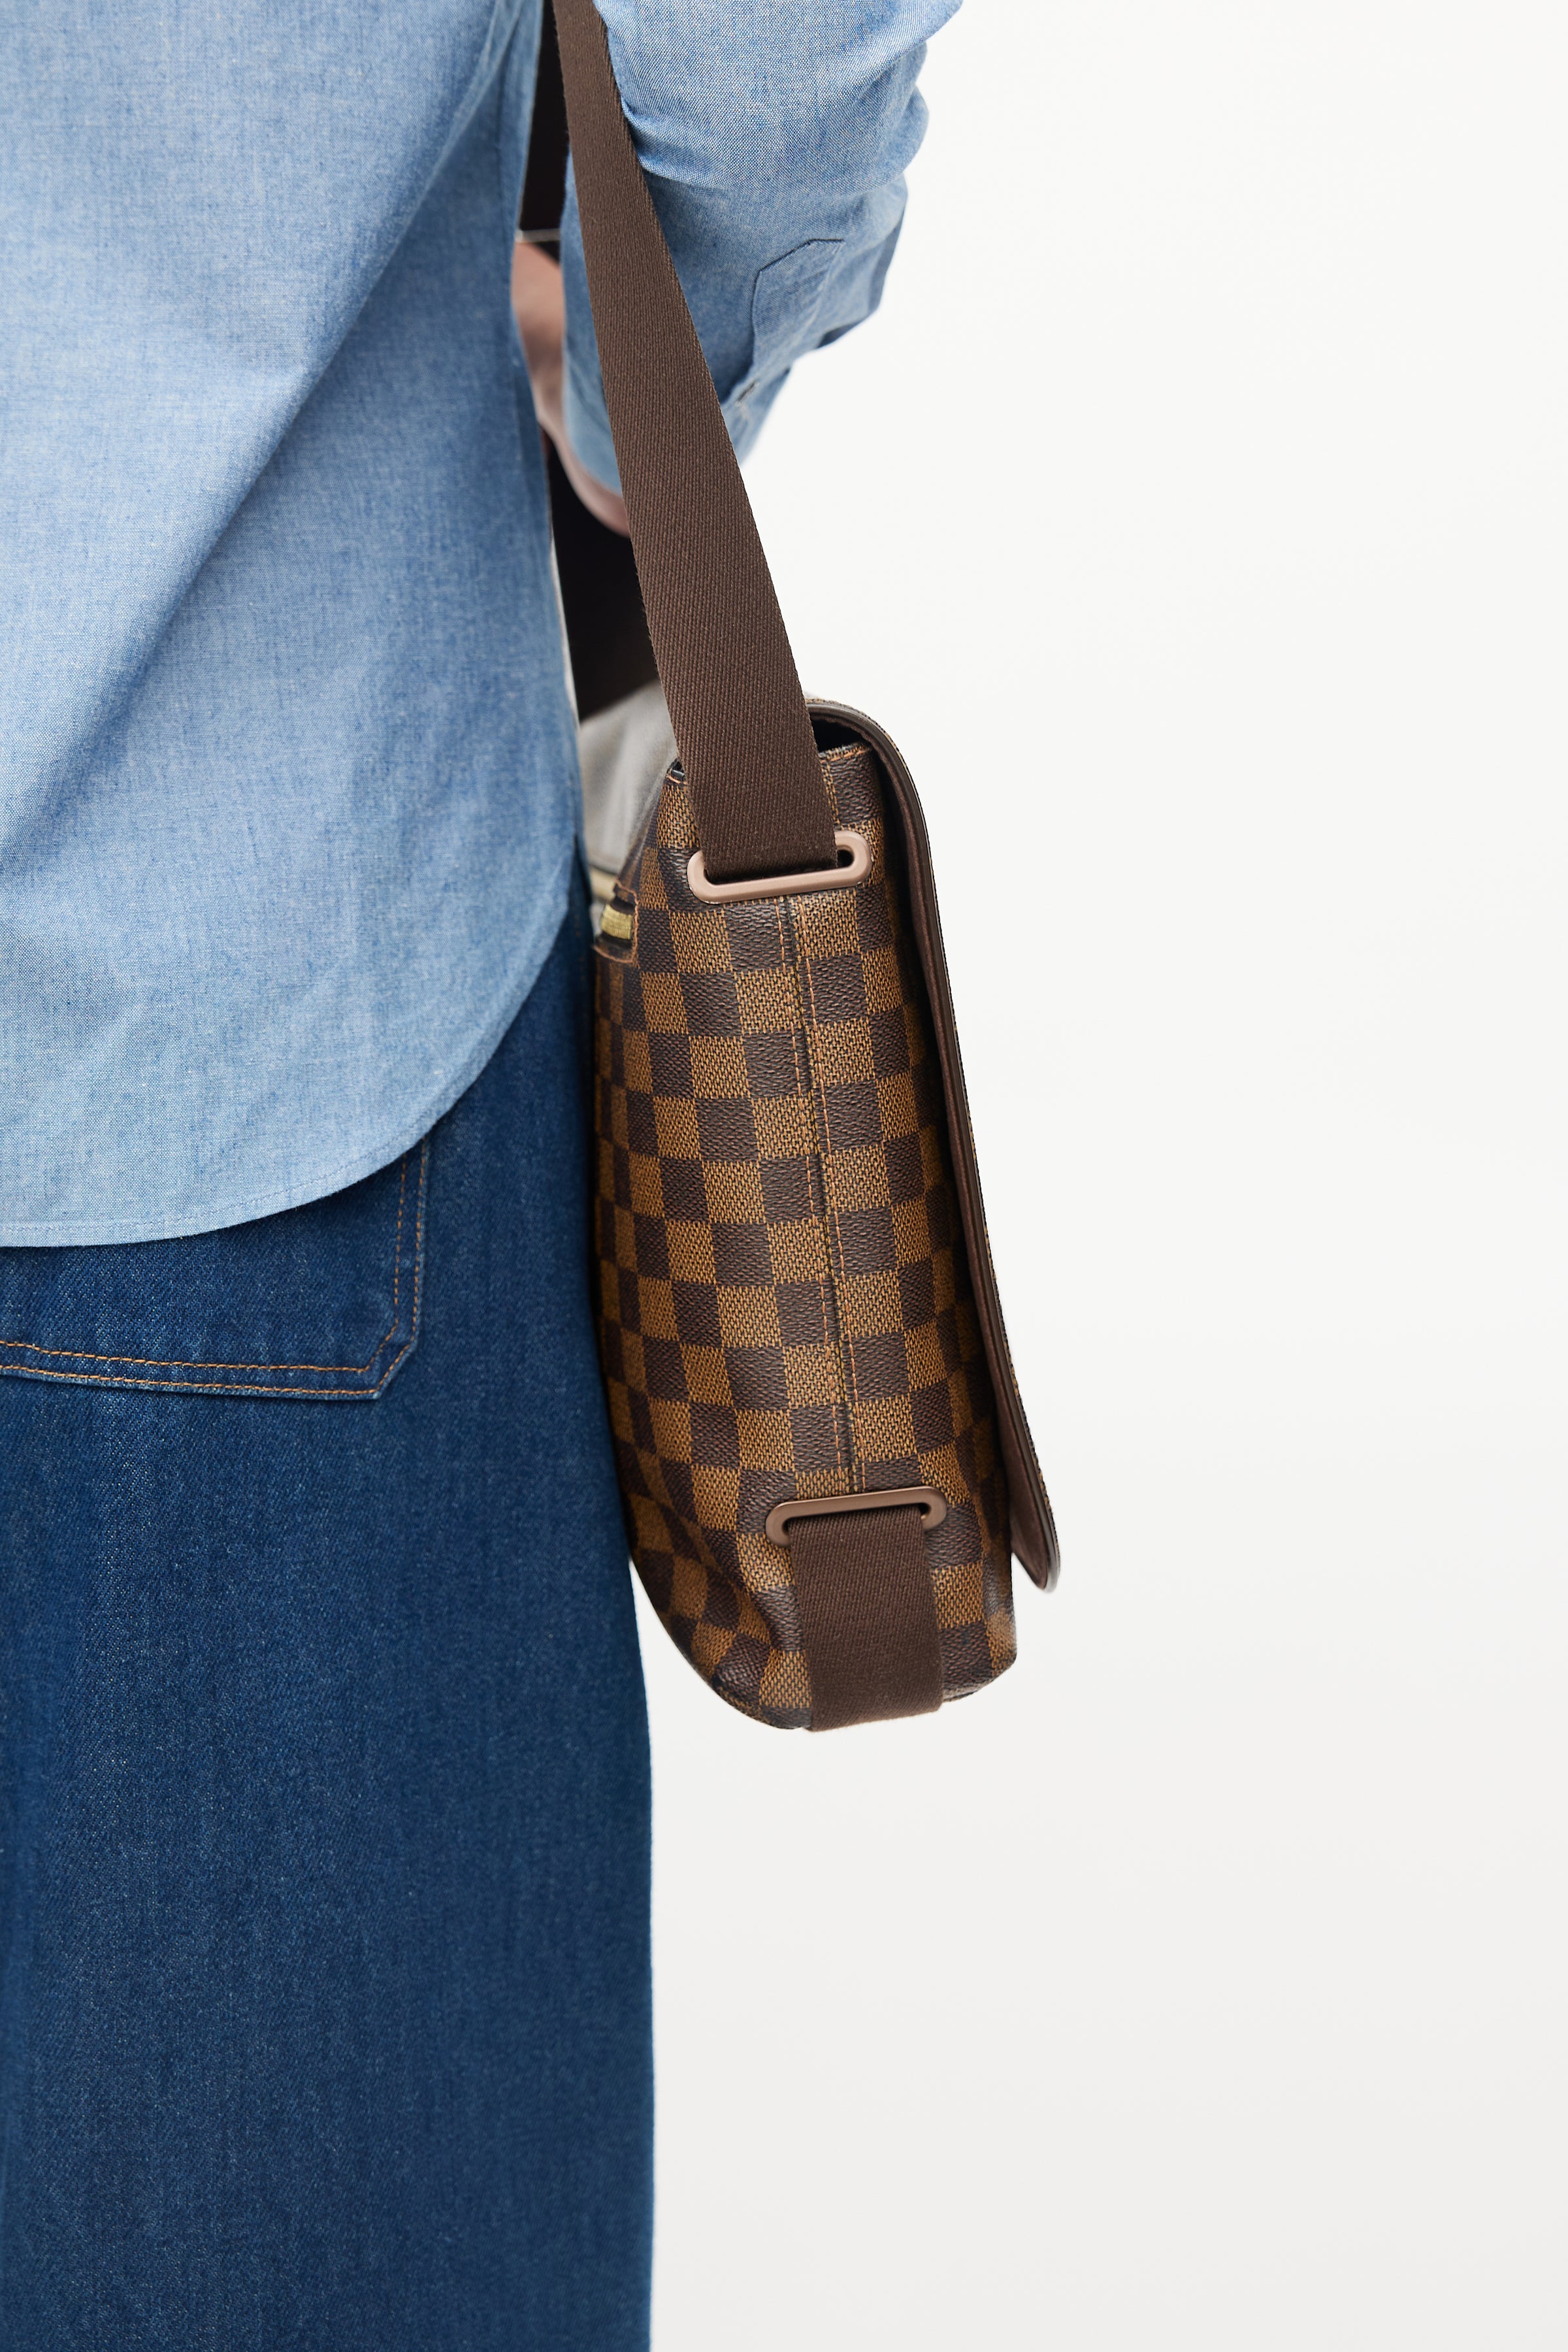 Louis Vuitton Damier Brooklyn GM Leather Fabric Brown Shoulder bag 648